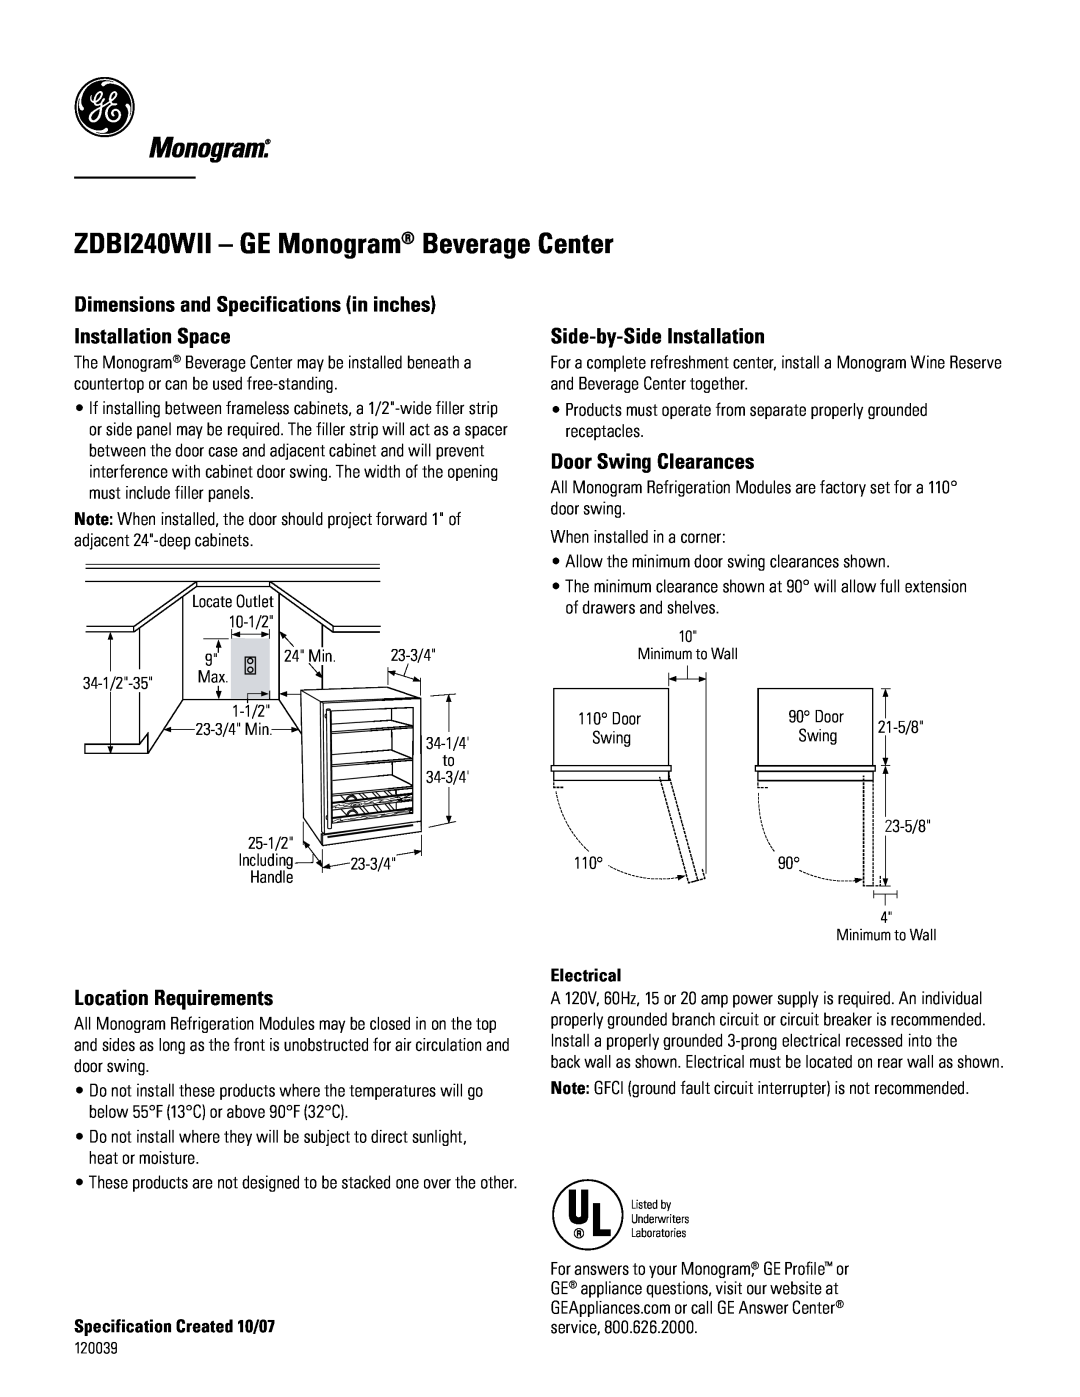 GE Monogram dimensions ZDBI240WII - GE Monogram Beverage Center, Electrical, Specification Created 10/07 